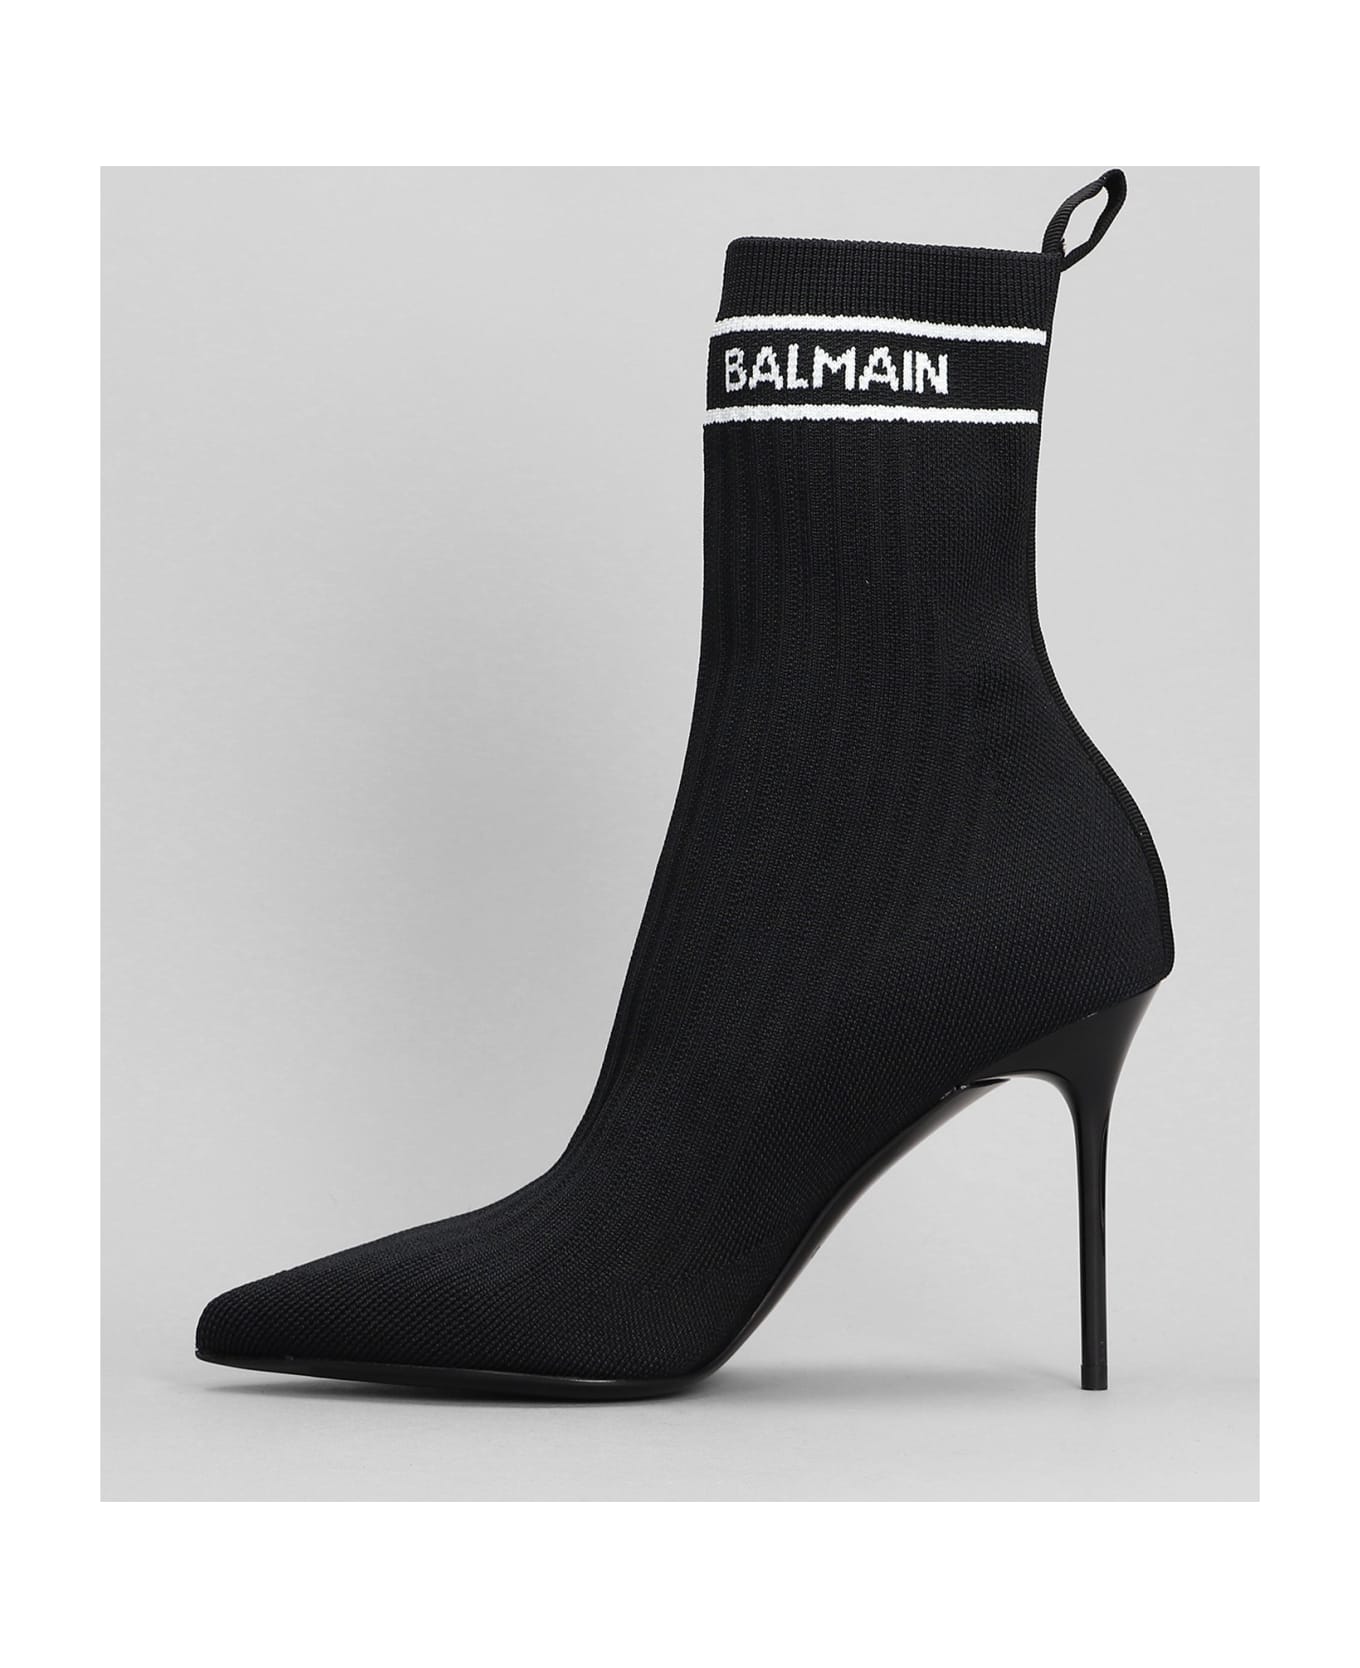 Balmain High Heels Ankle Boots - black